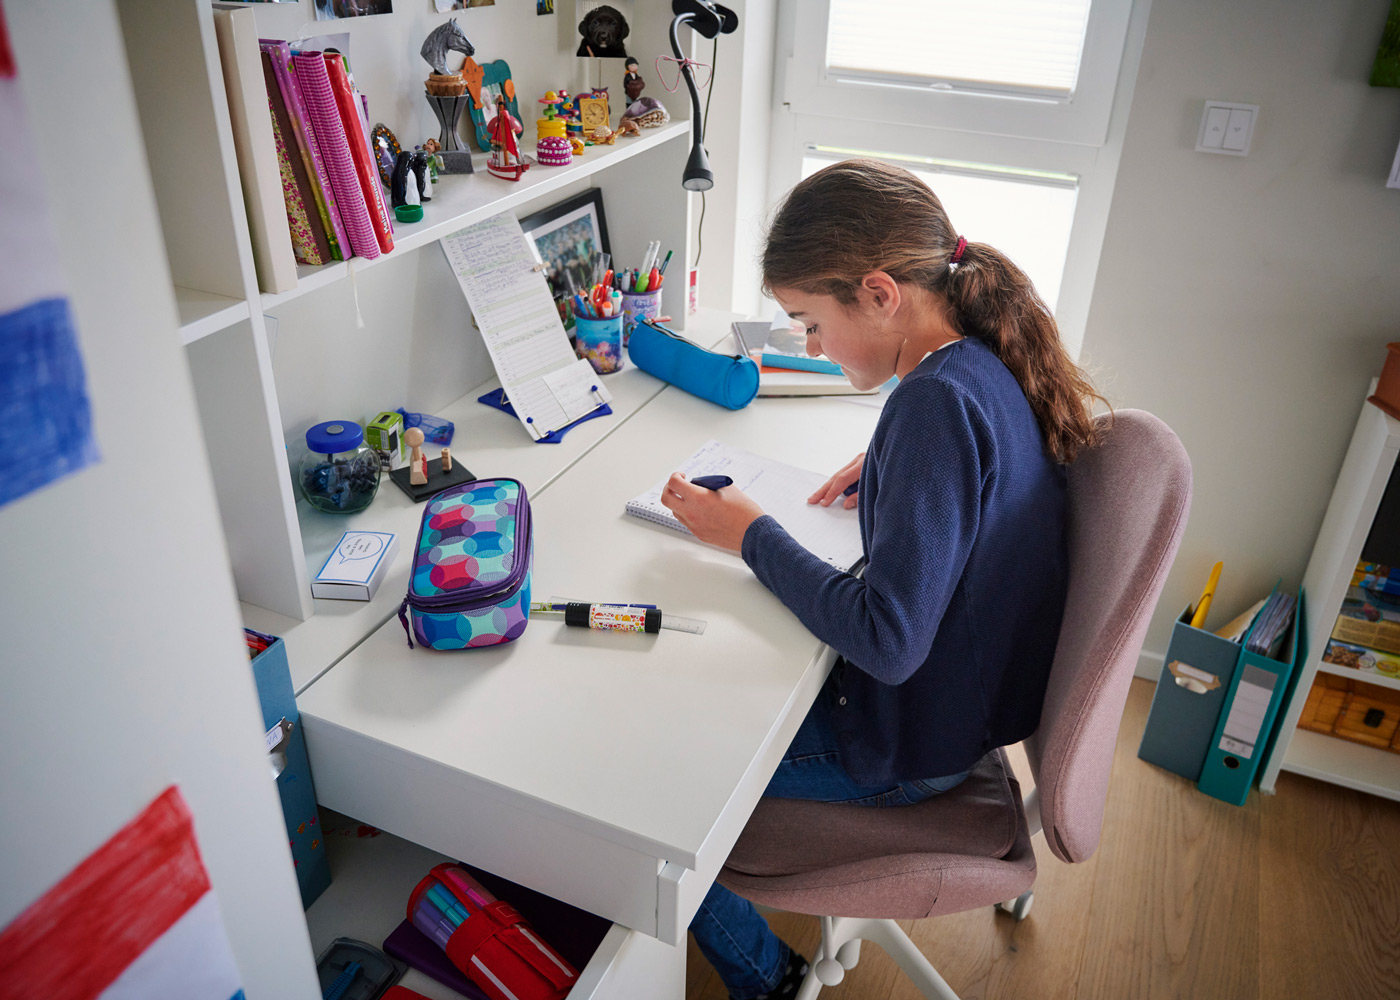 Girl doing homework in her room at a desk.